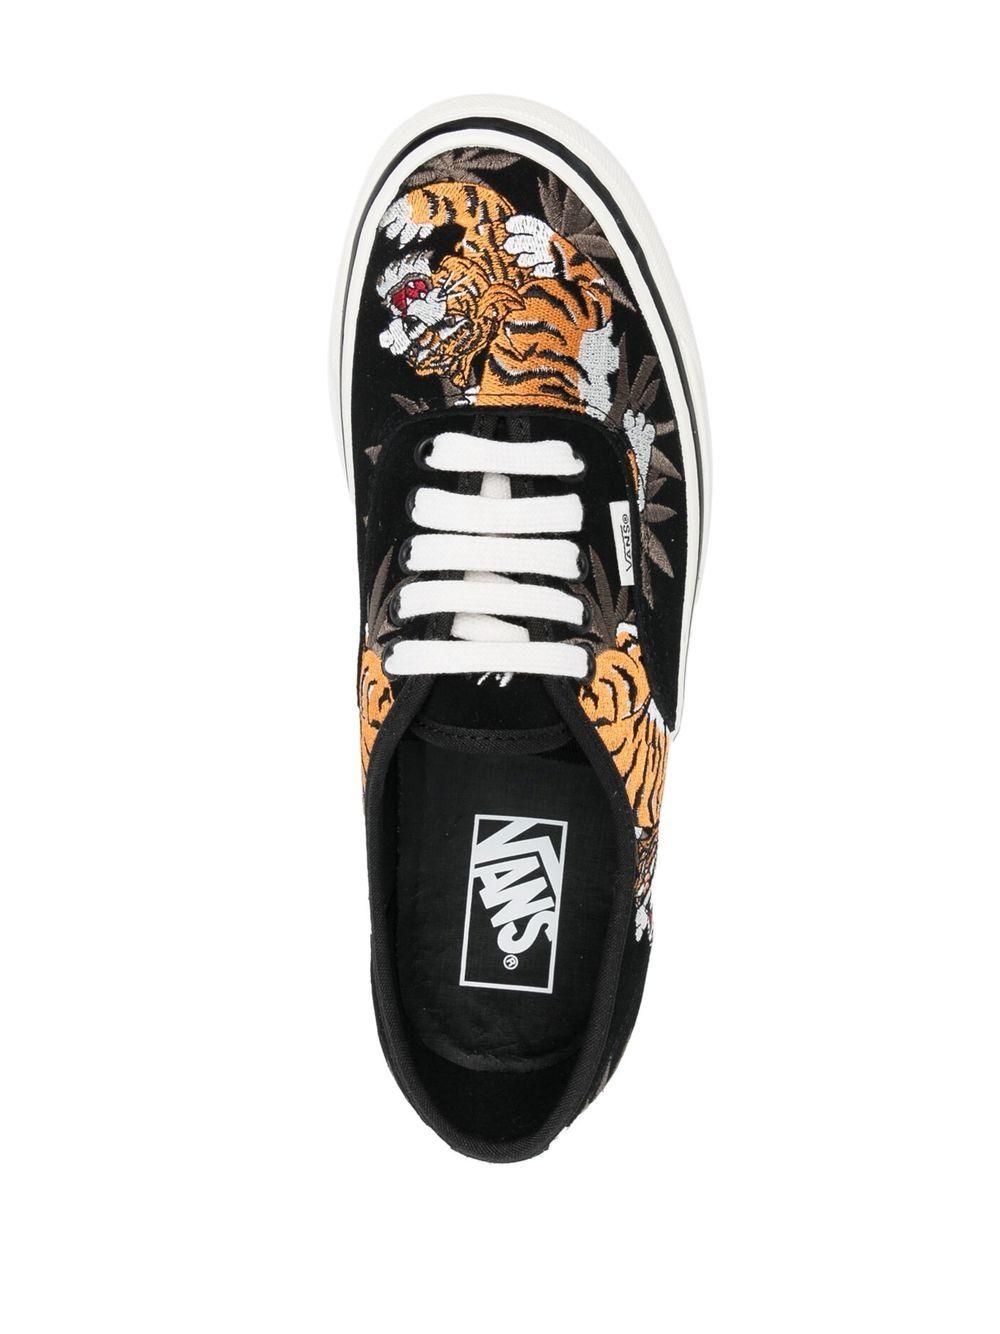 Vans Tiger-motif Embroidered Sneakers in Black for Men - Save 10% | Lyst